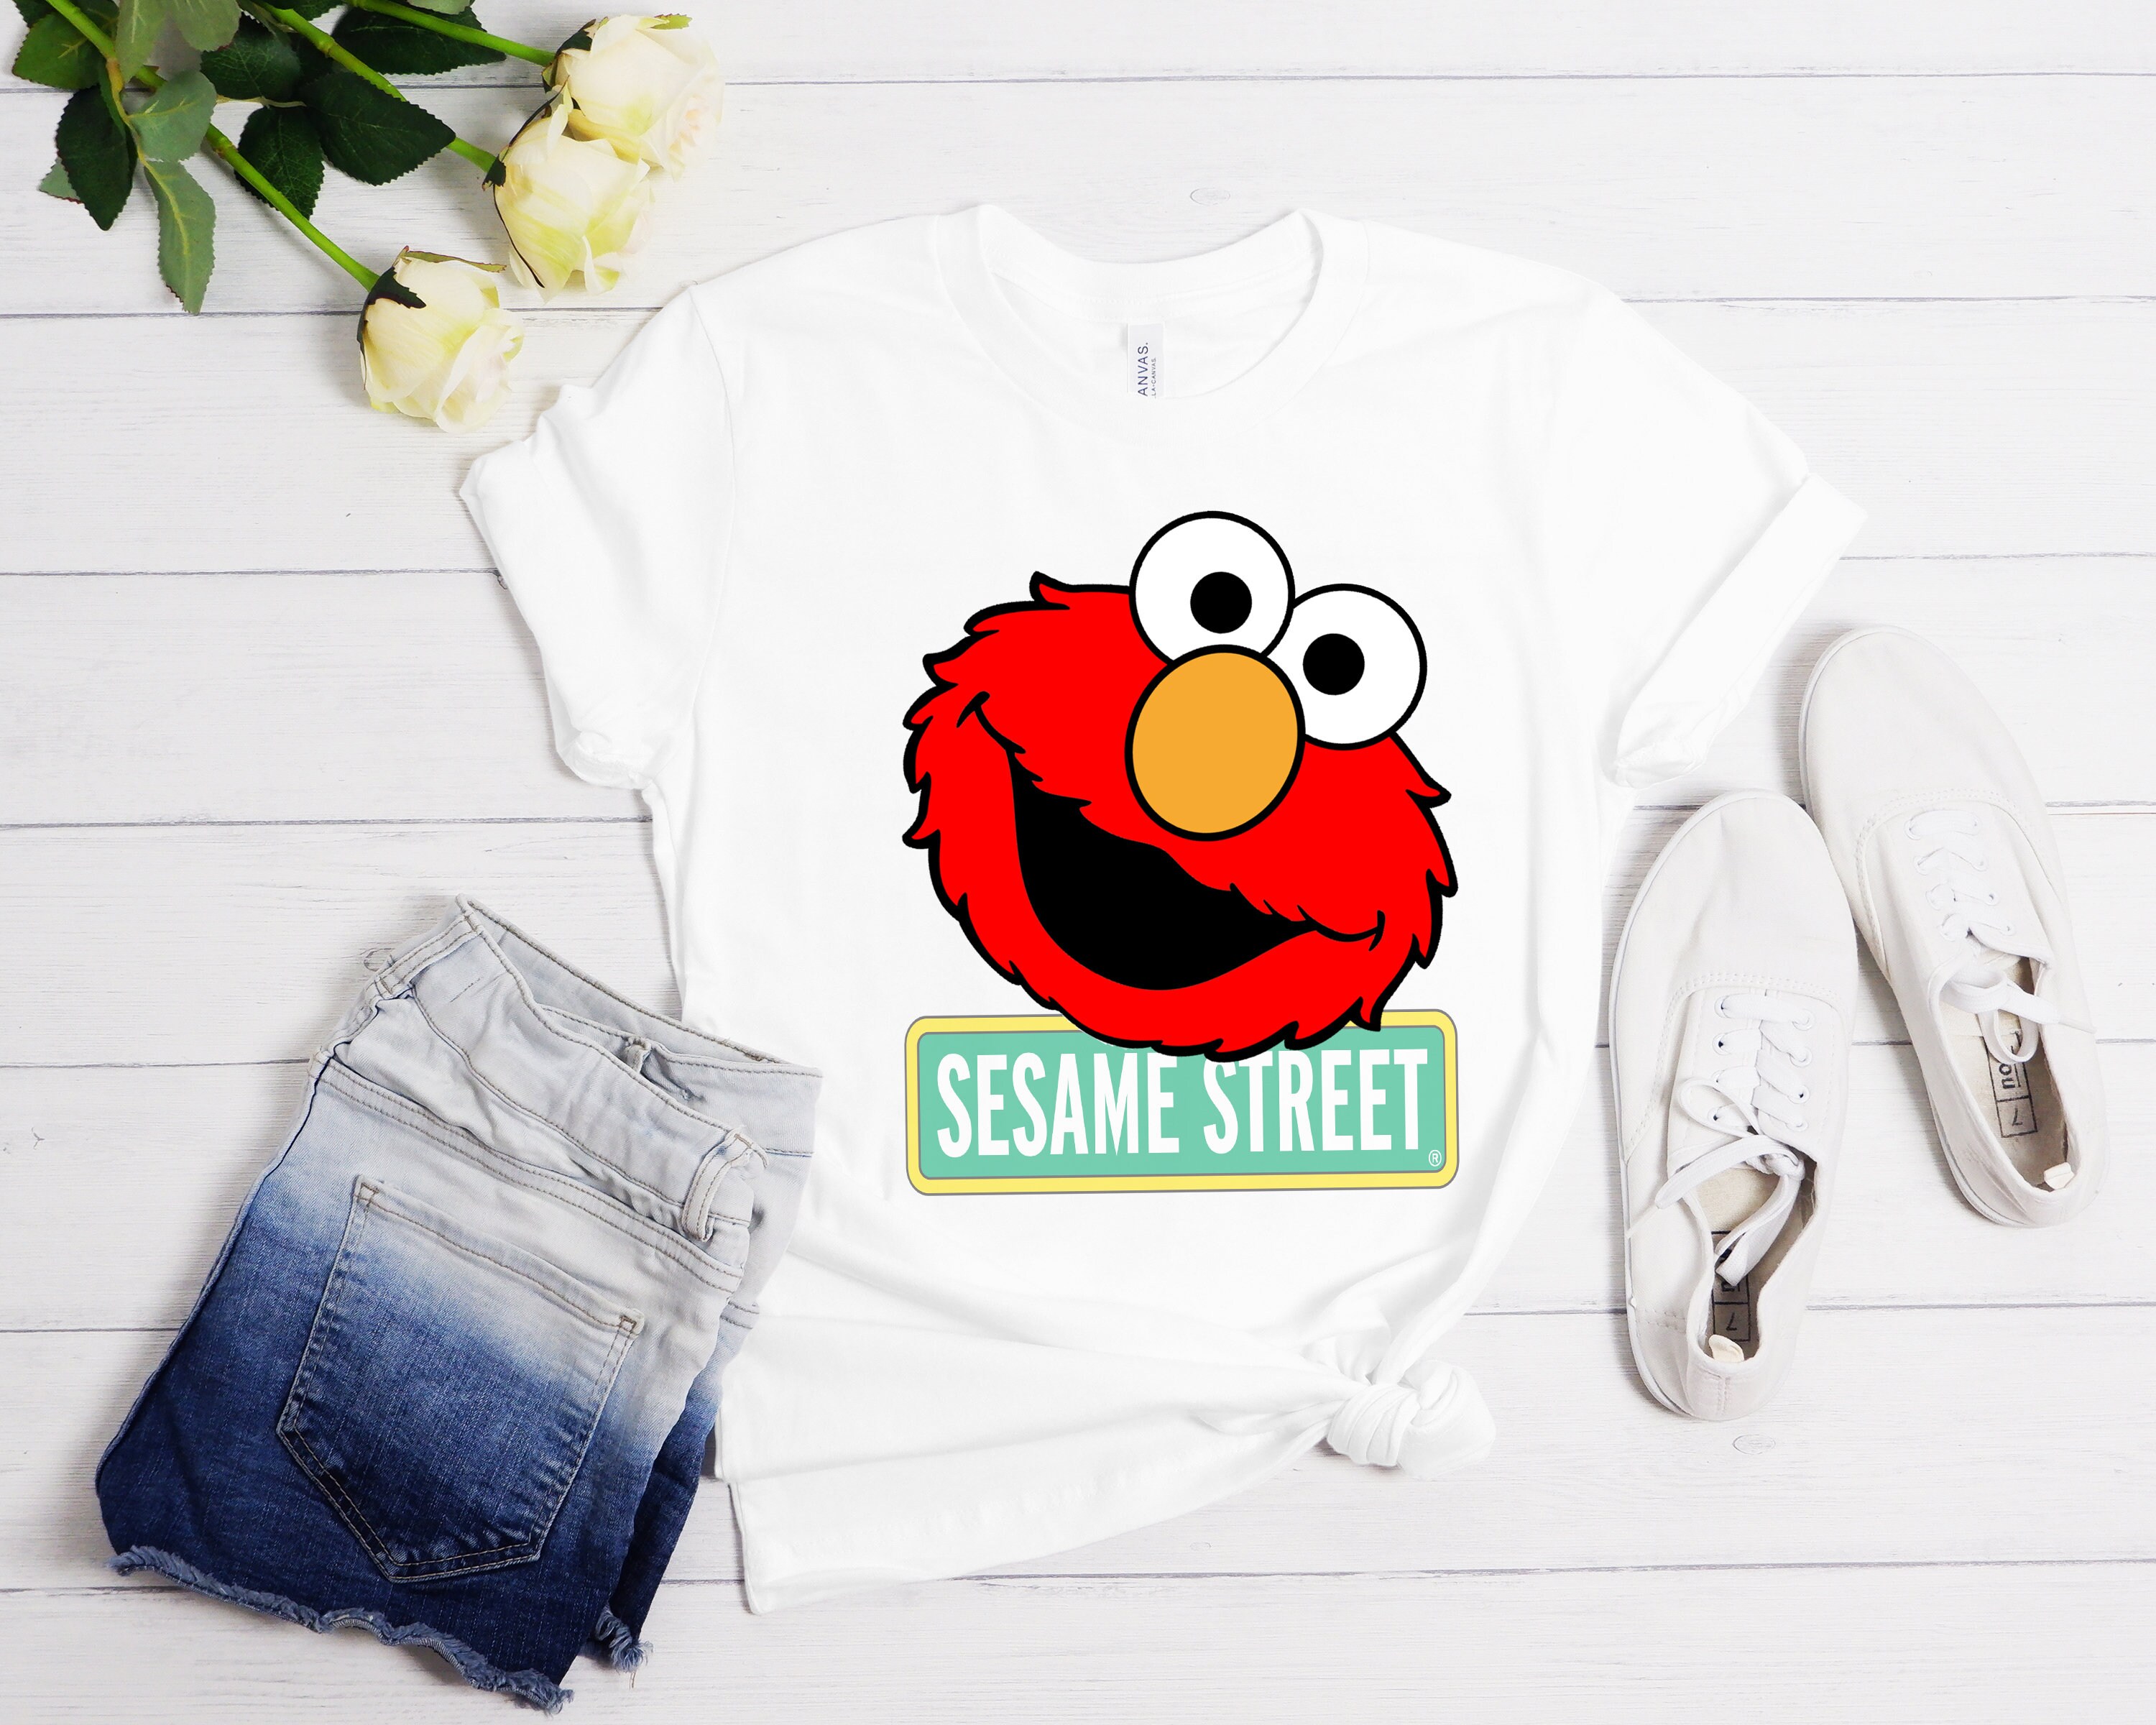 Sesame Street Shirt, Sesame Street Tee sold by Tiresome Tailgate, SKU  39502057